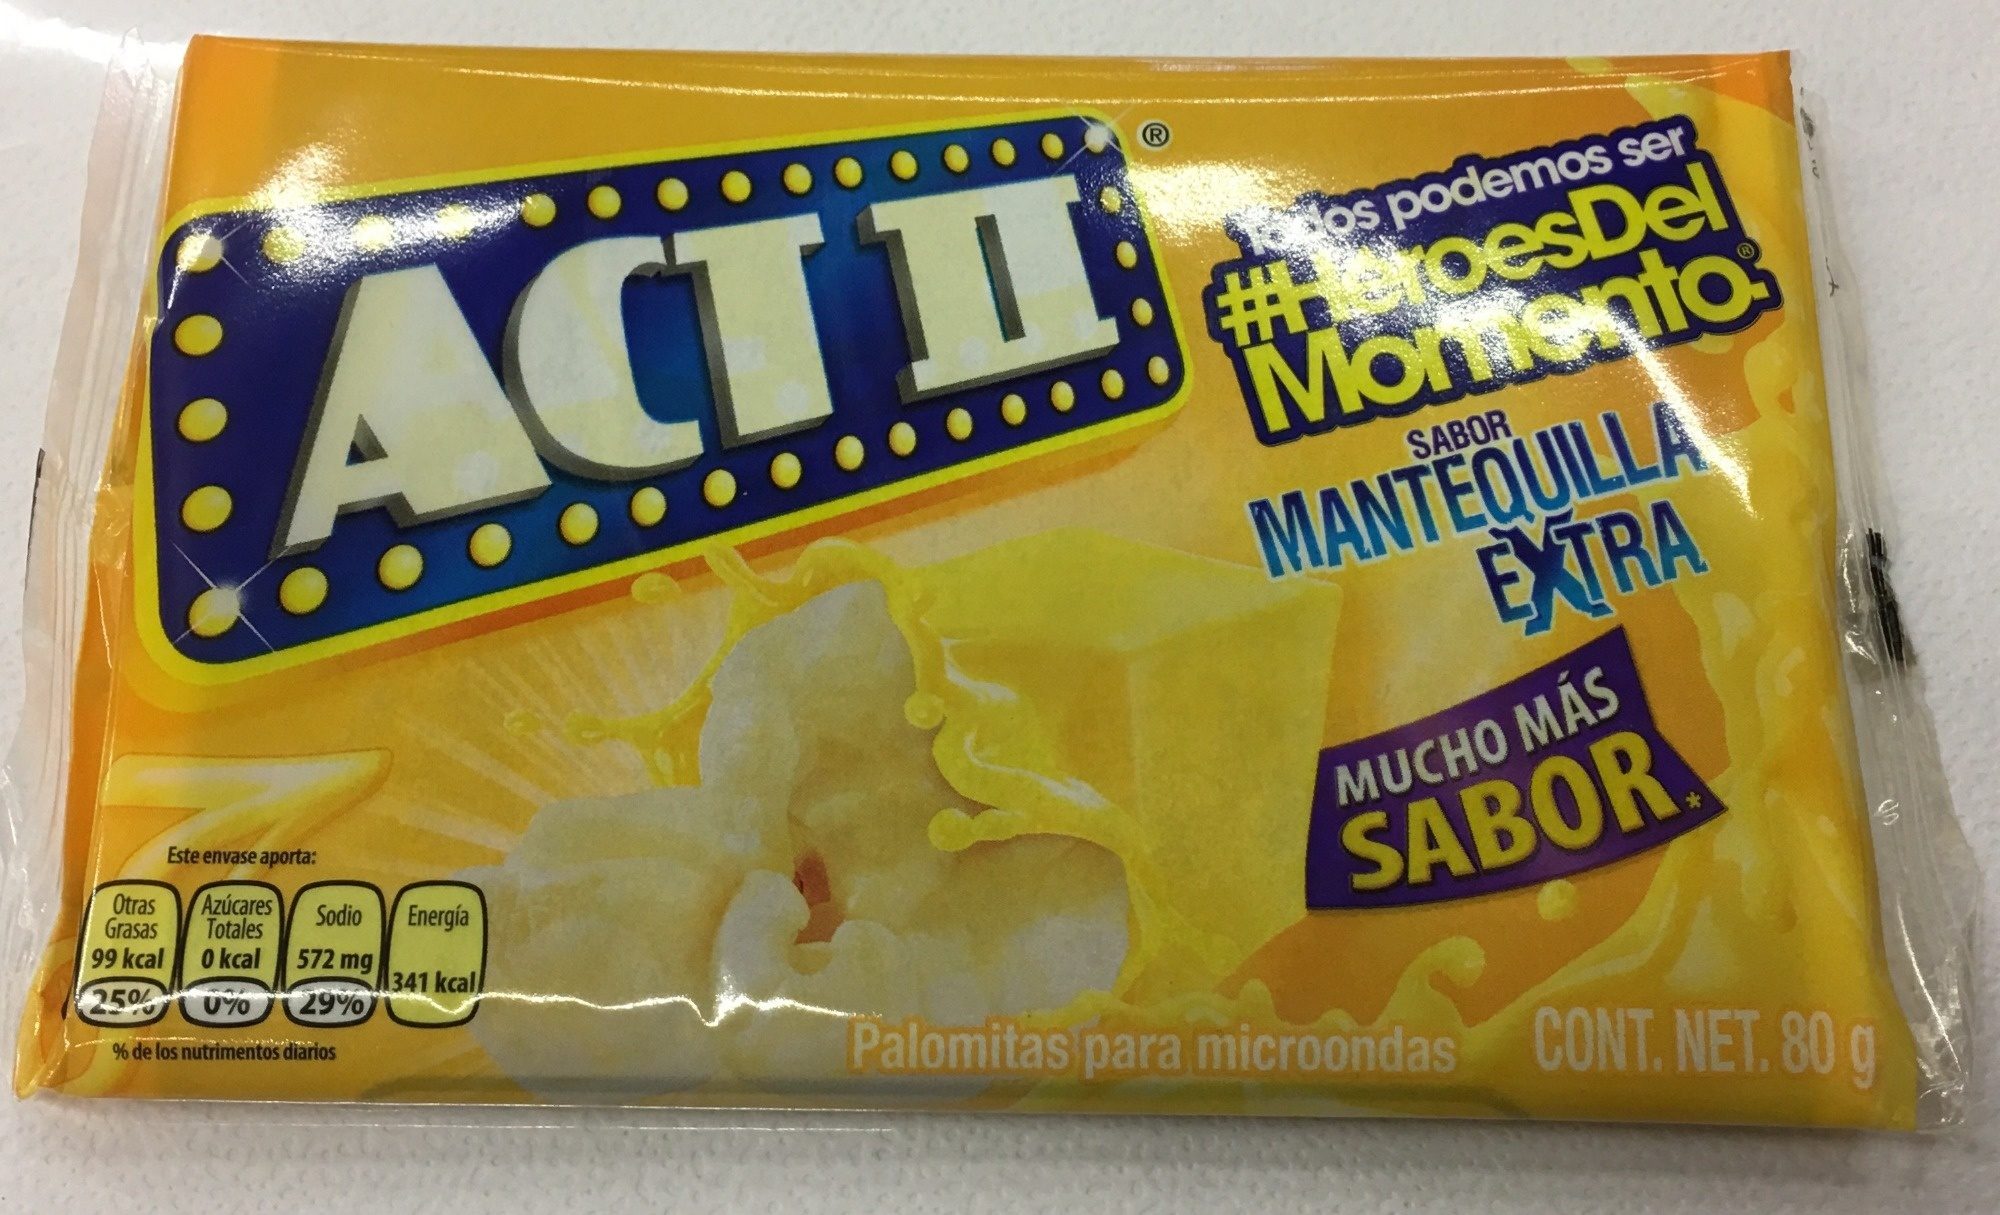 Act II sabor Mantequilla Extra - Product - es